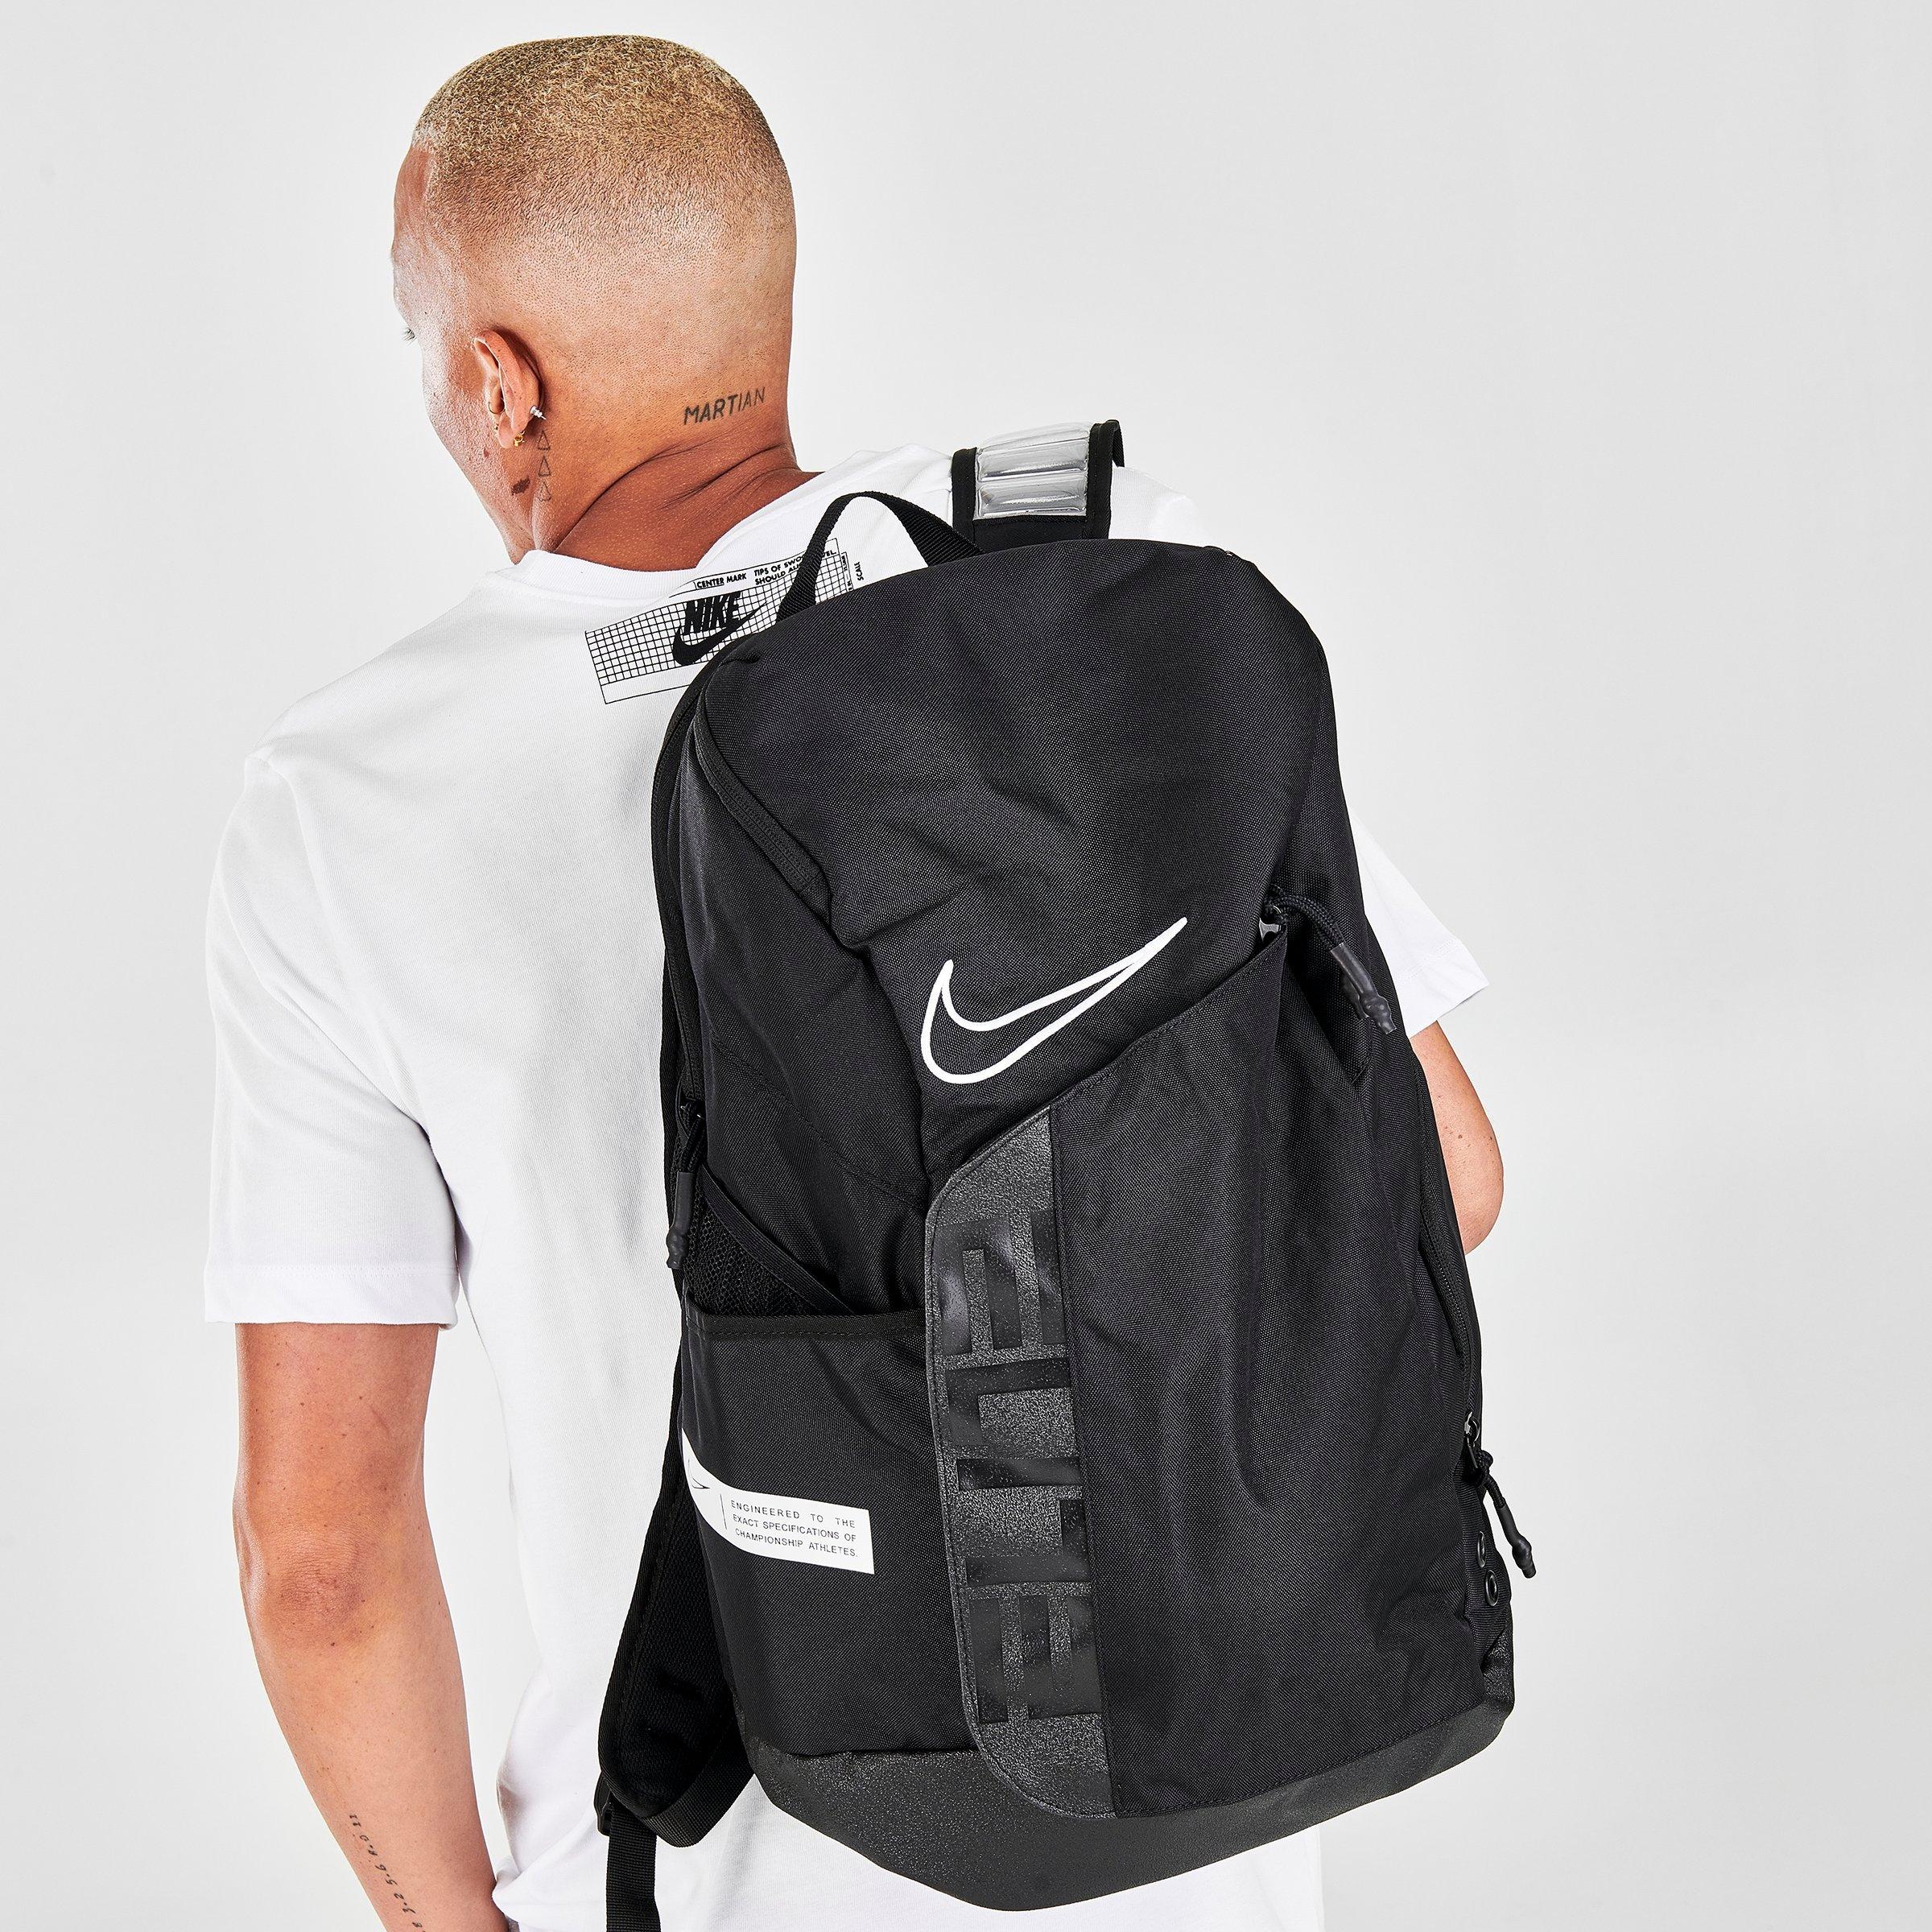 backpack with basketball pocket